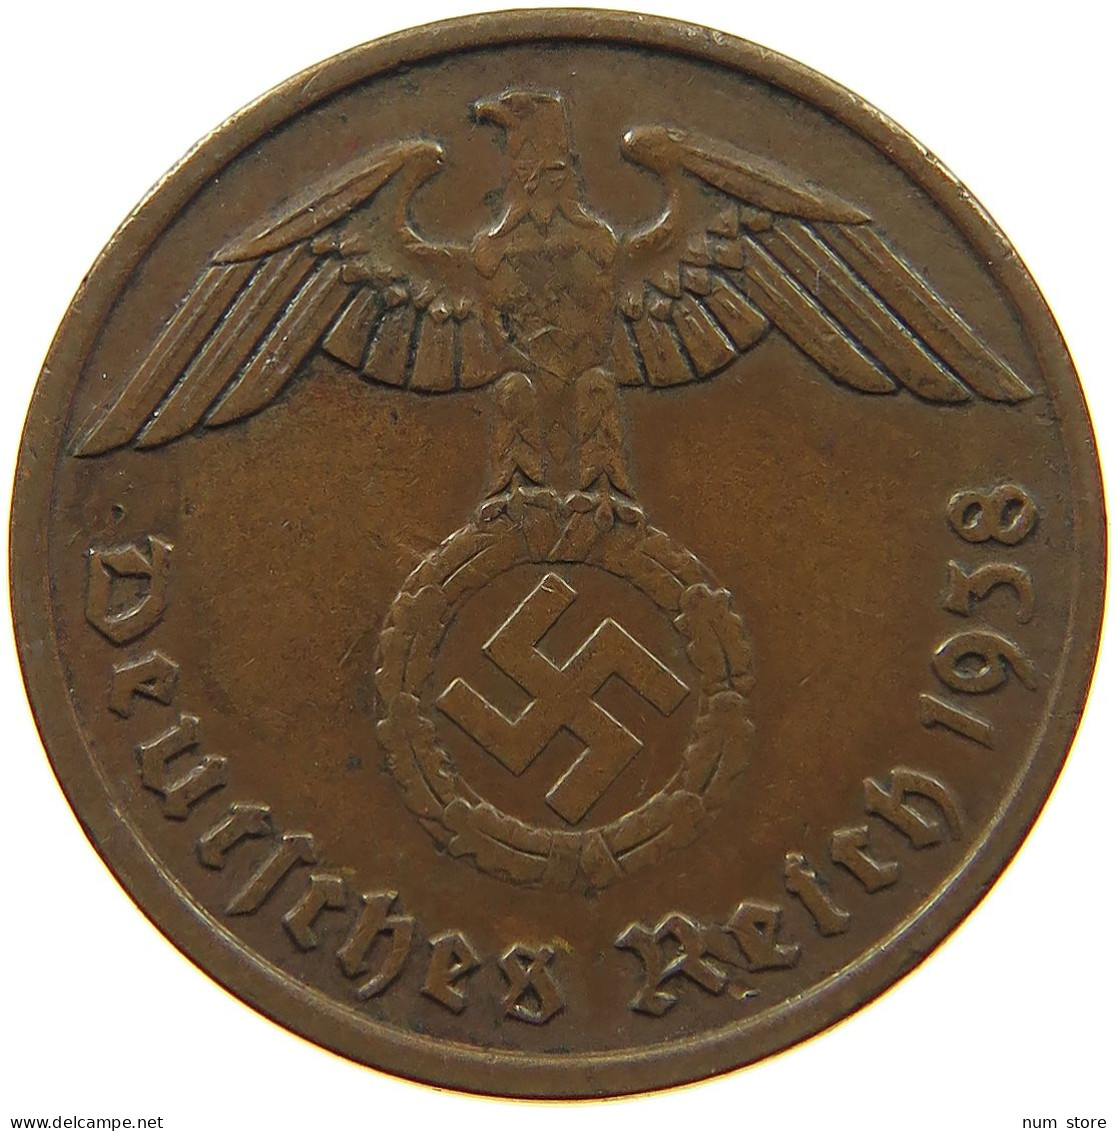 GERMANY 2 PFENNIG 1938 A #c083 0111 - 2 Reichspfennig